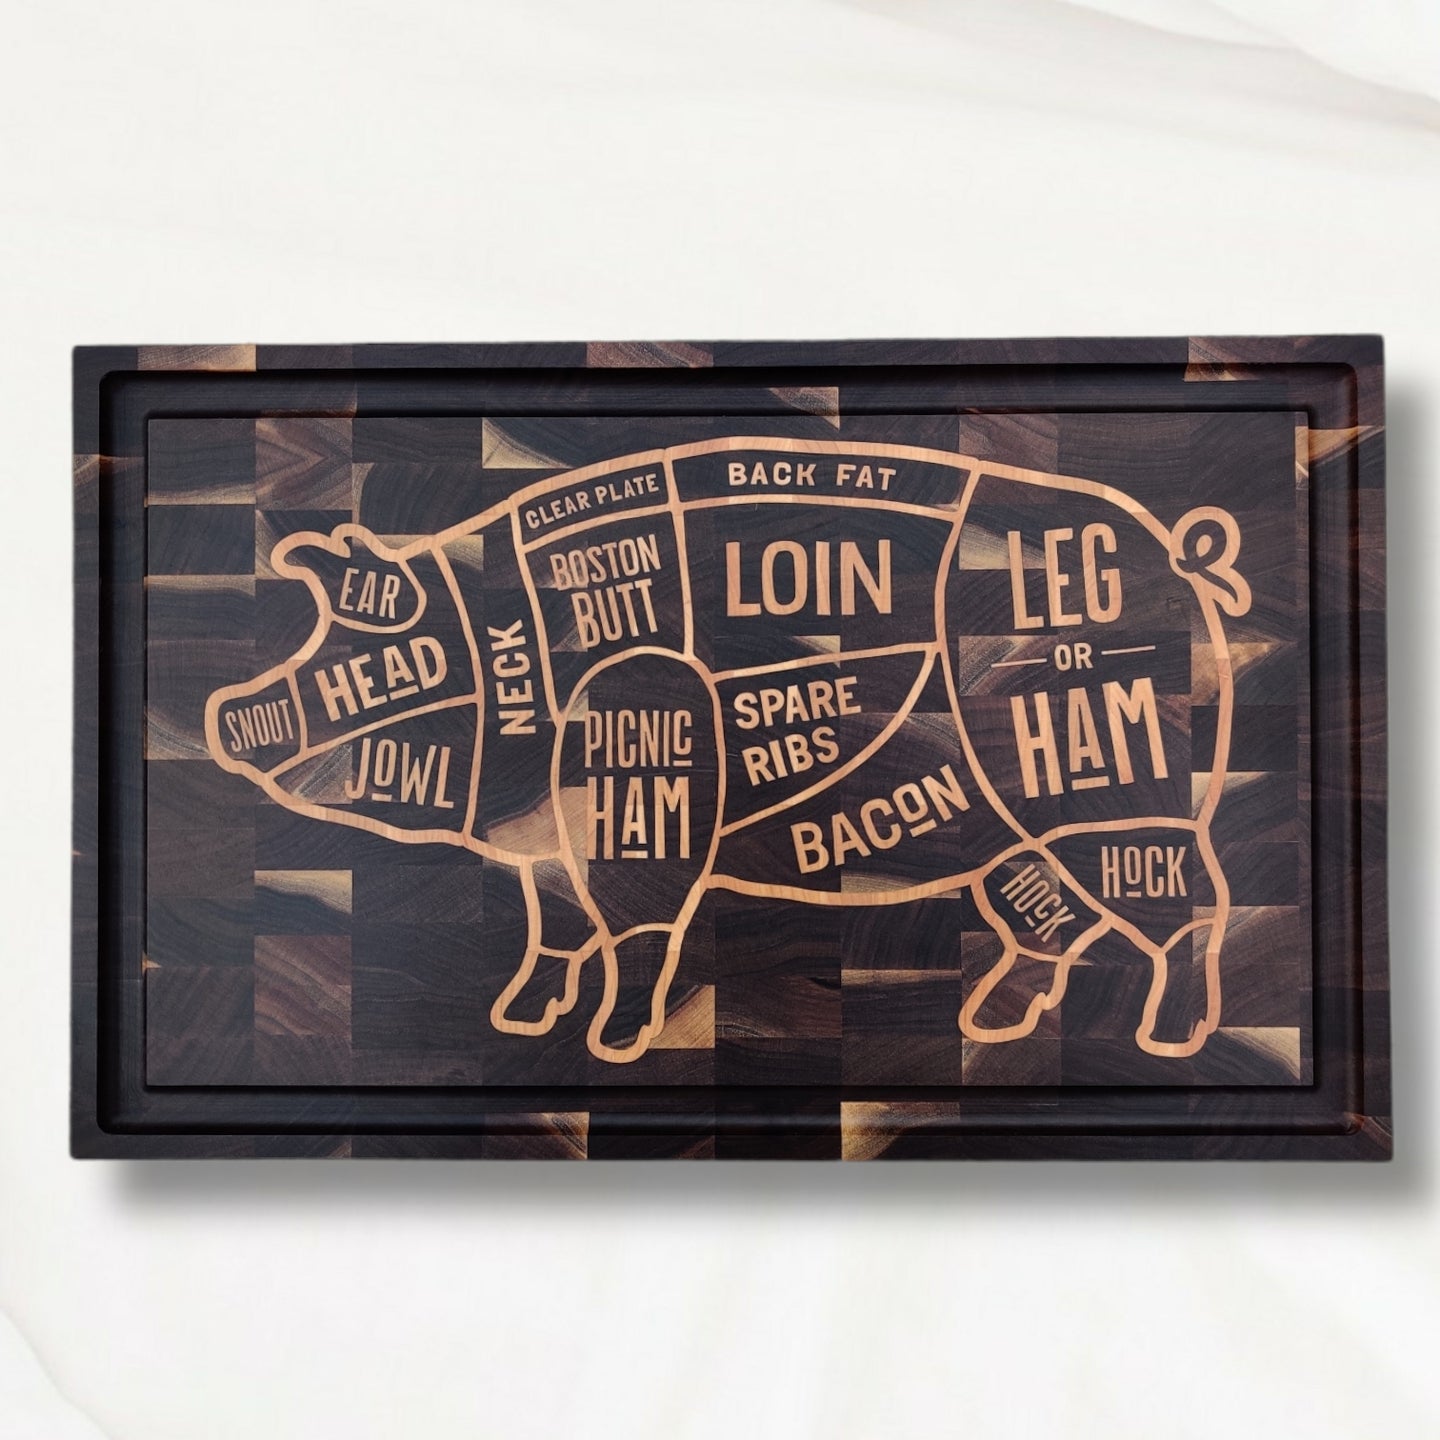 The Pig cutting board